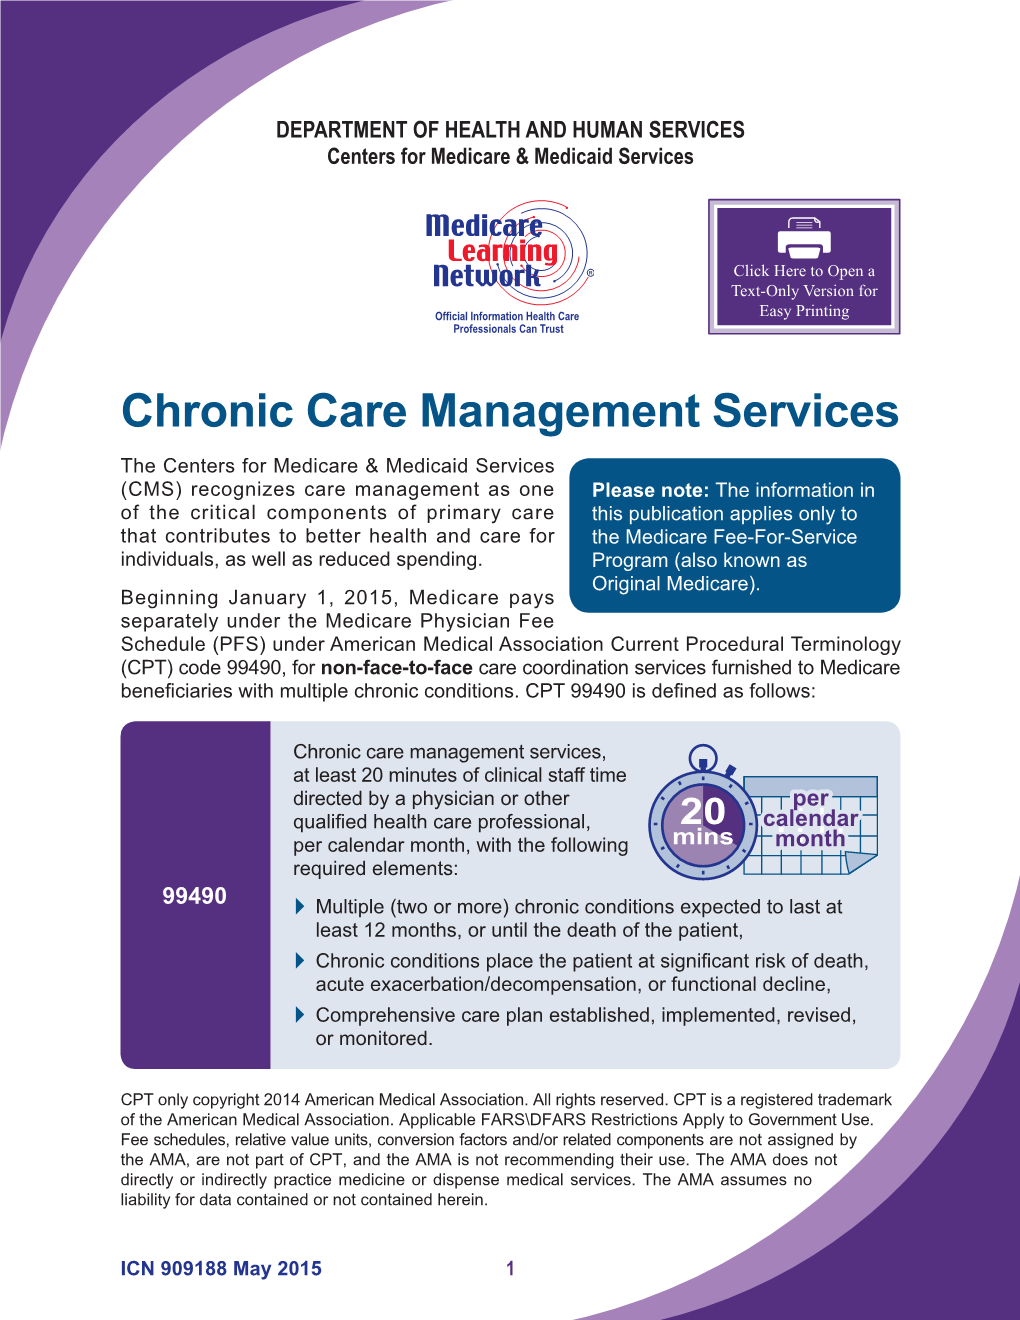 Chronic Care Management Services